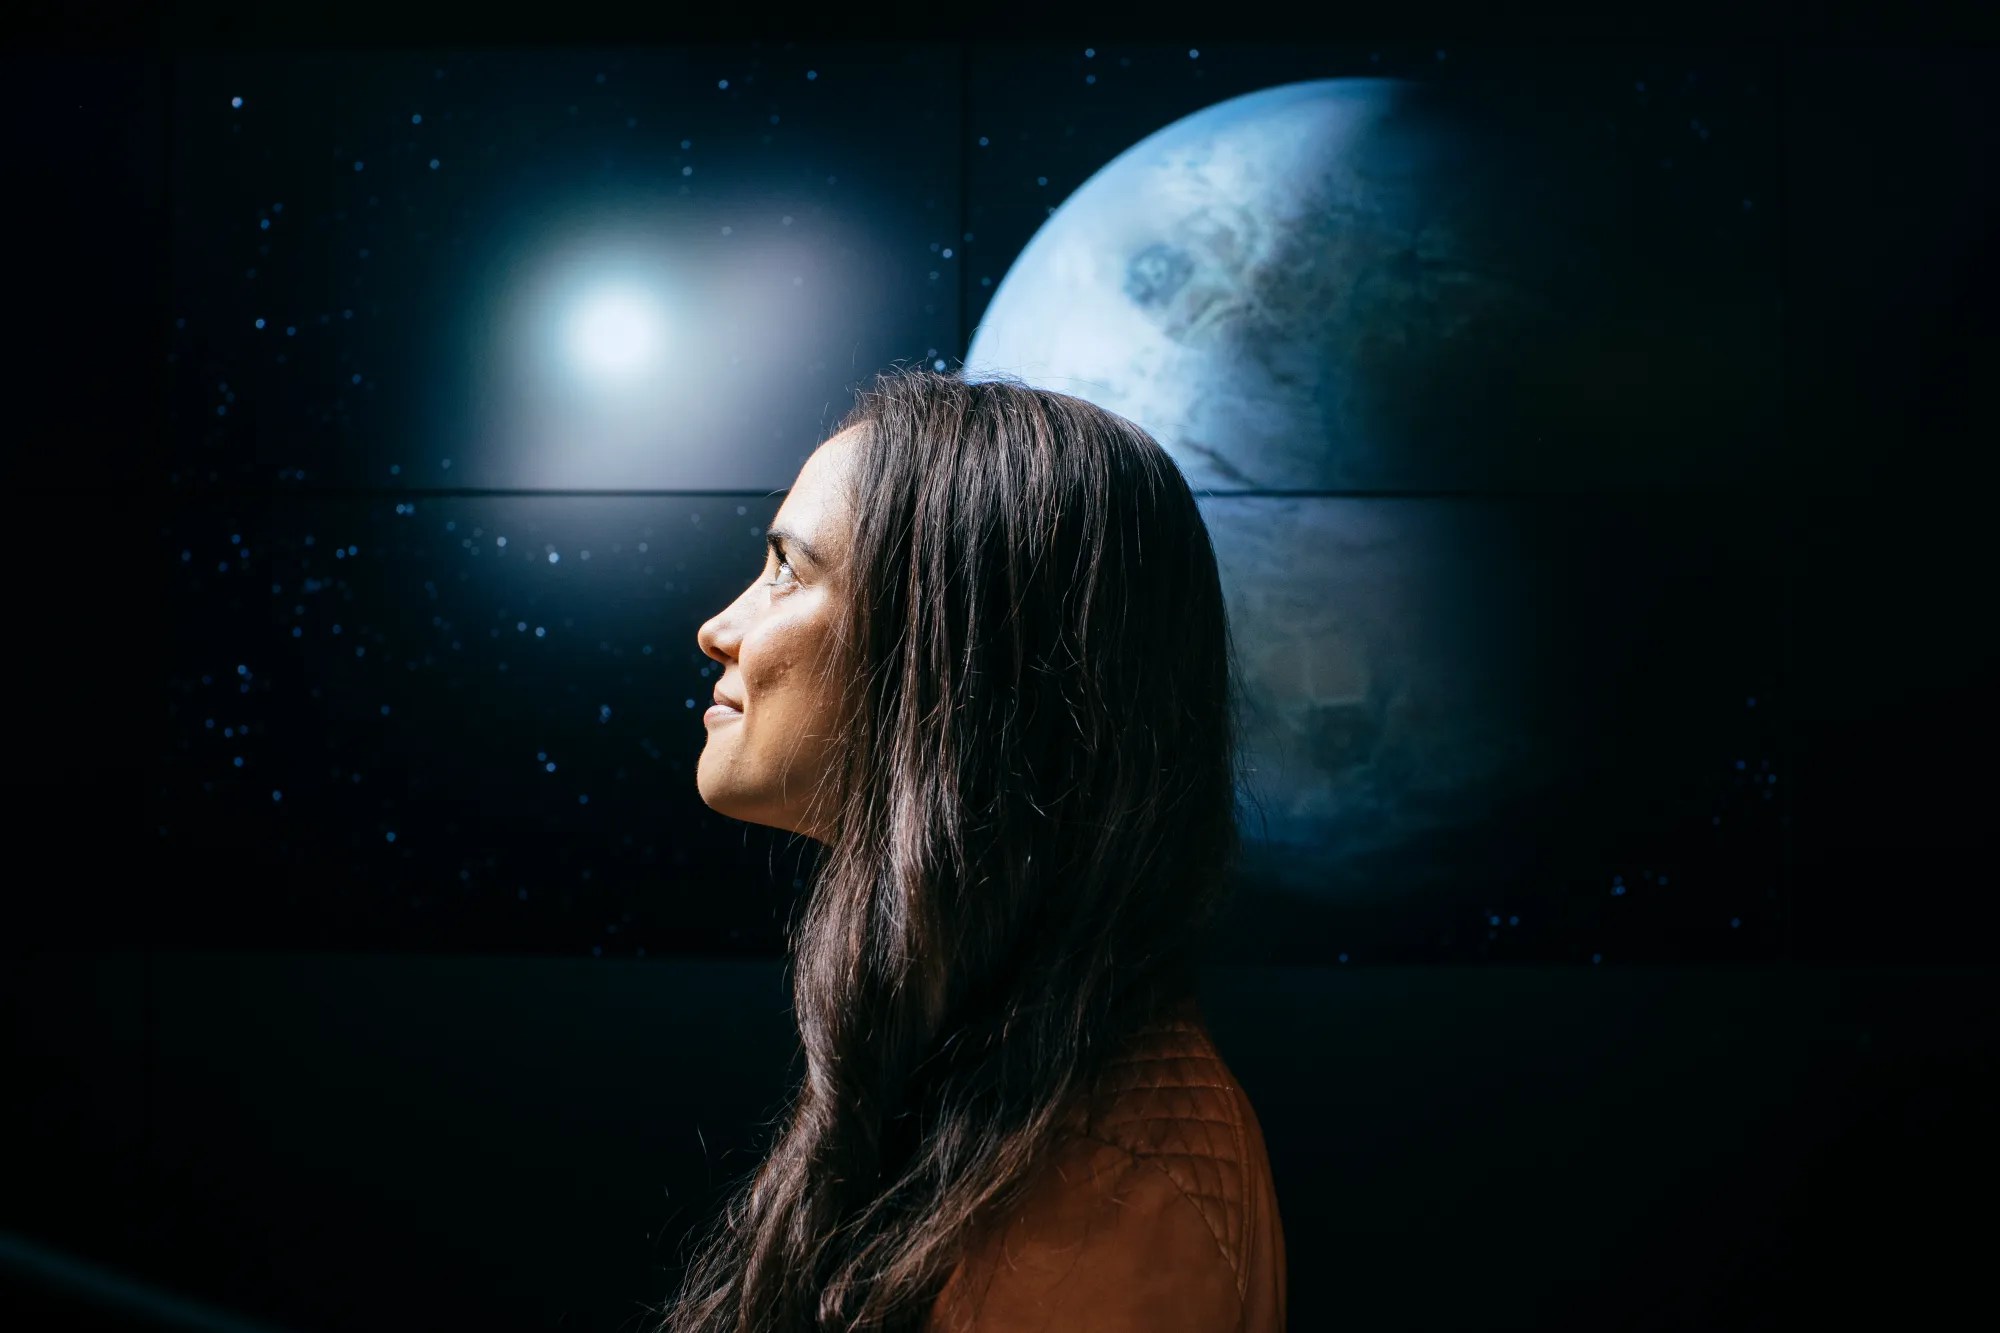 Dr. Natasha Batalha has been hooked on the search for life beyond Earth since elementary school. UC Santa Cruz, UC Regents